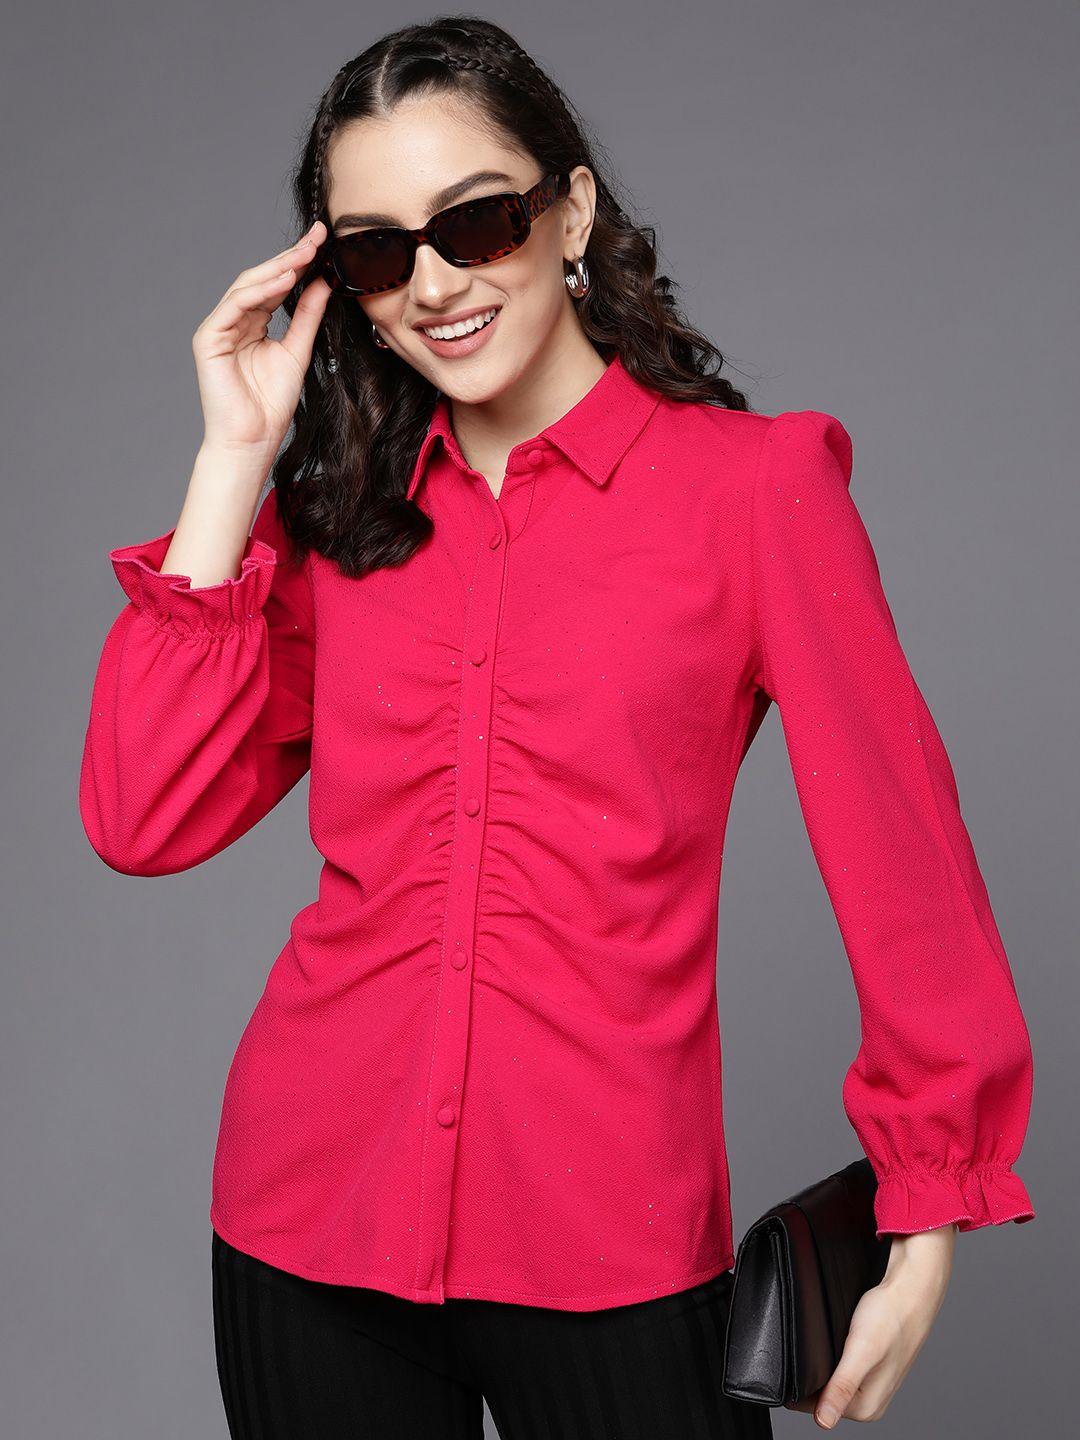 sassafras women fuchsia pink shimmer fitted ruched shirt